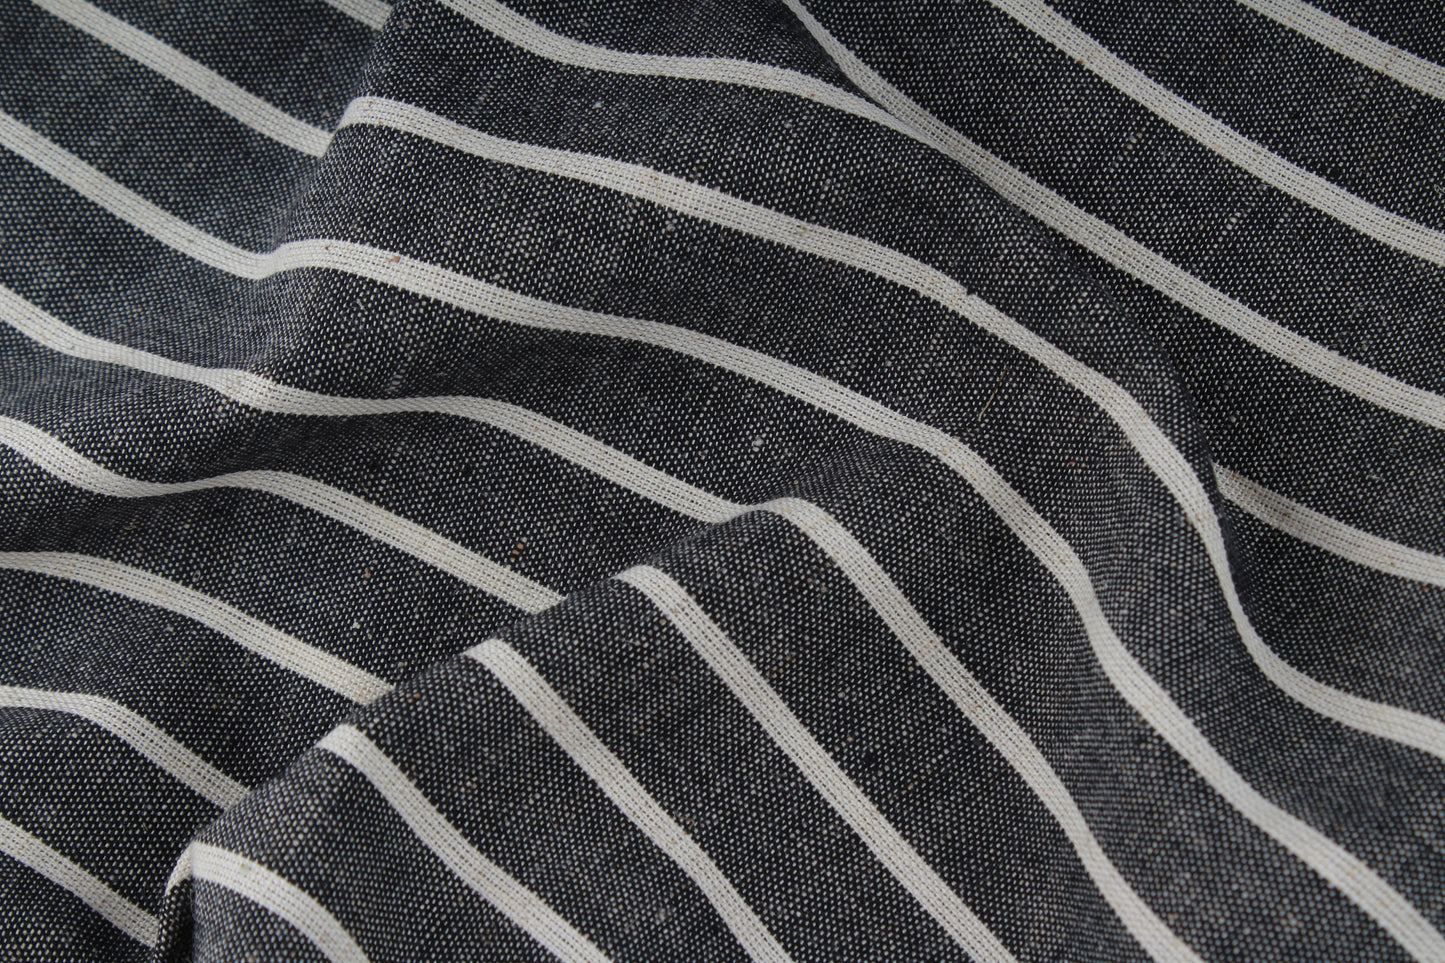 Grey Striped Loom Textured Cotton Fabric